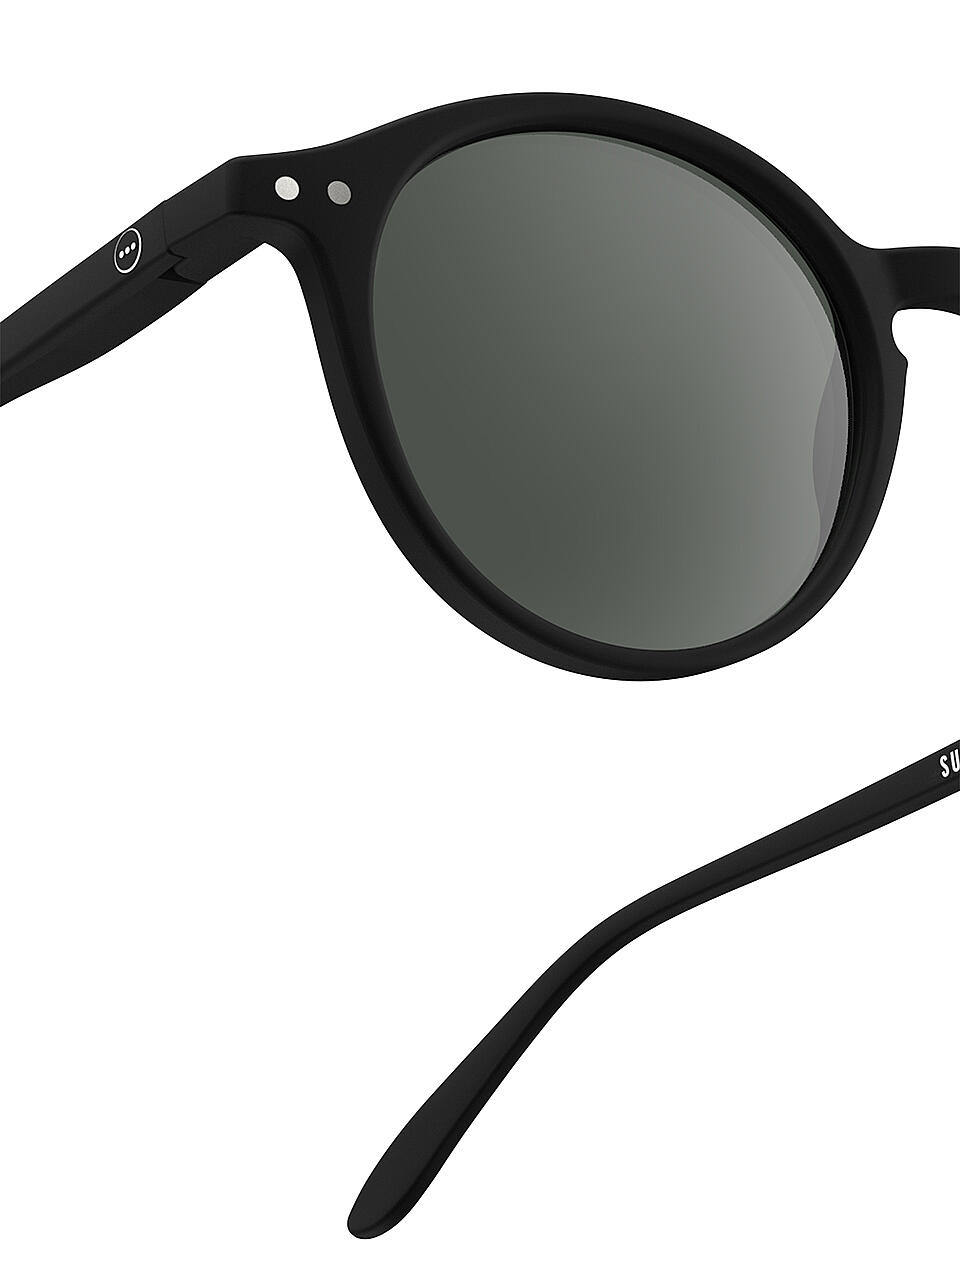 IZIPIZI | Sonnenbrille mit Sehstärke "Sun D"  (black) | schwarz